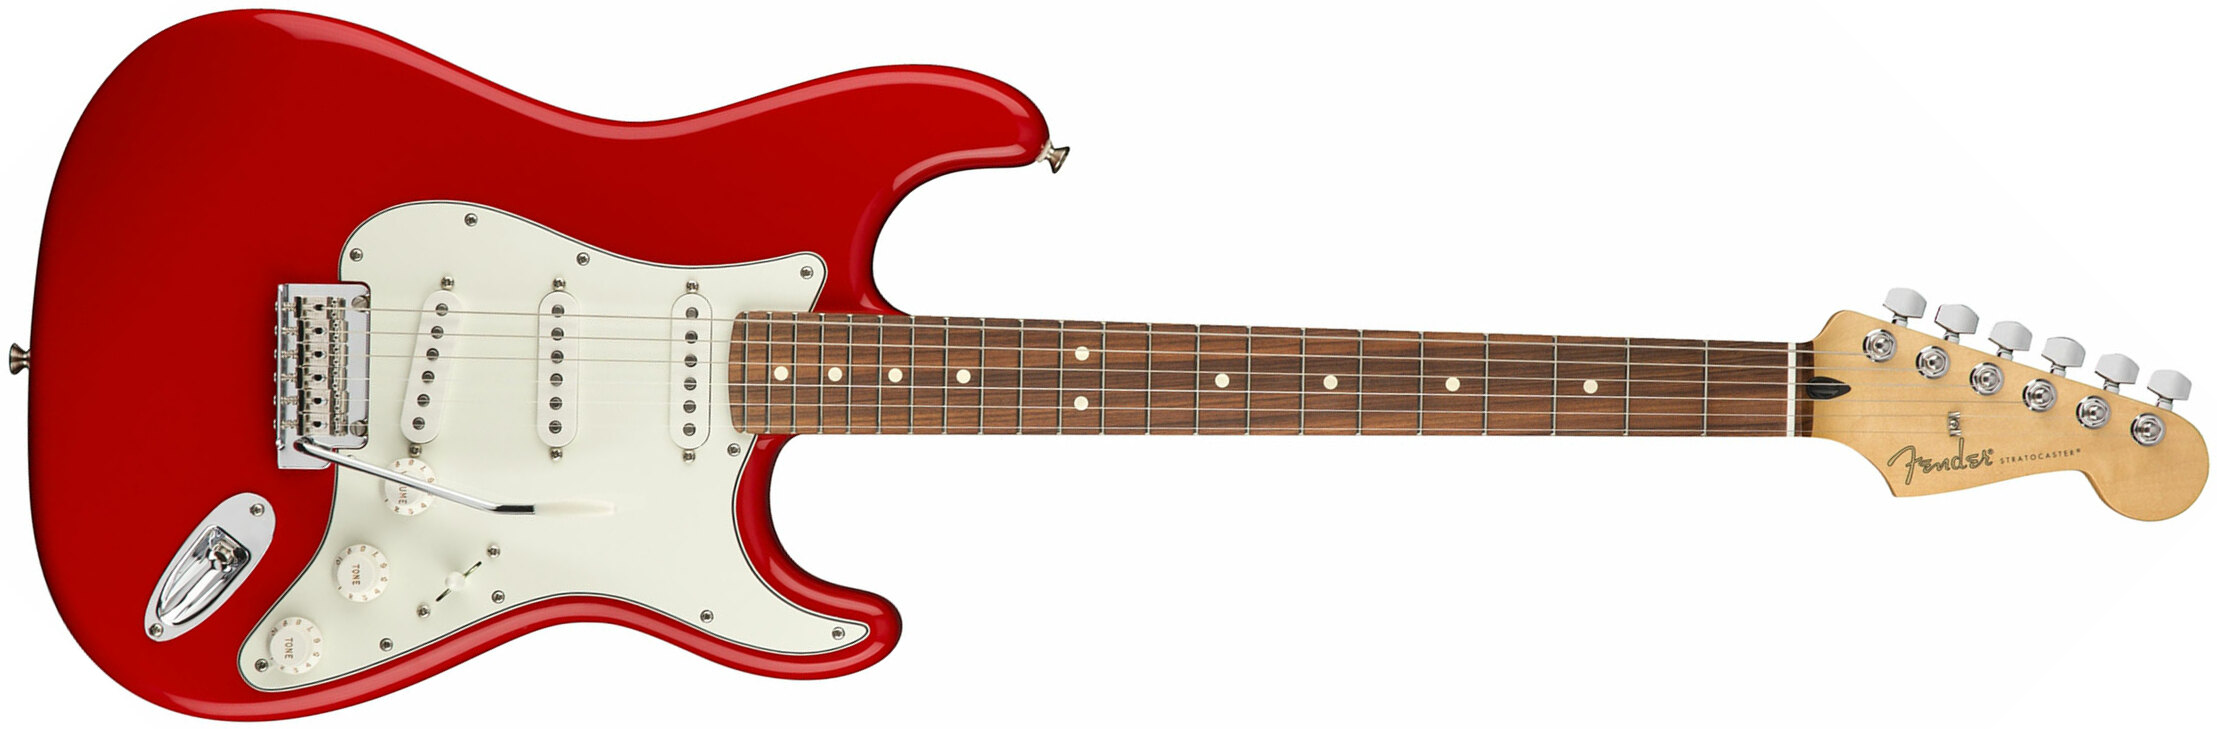 Fender Strat Player Mex Sss Pf - Sonic Red - Guitare Électrique Forme Str - Main picture